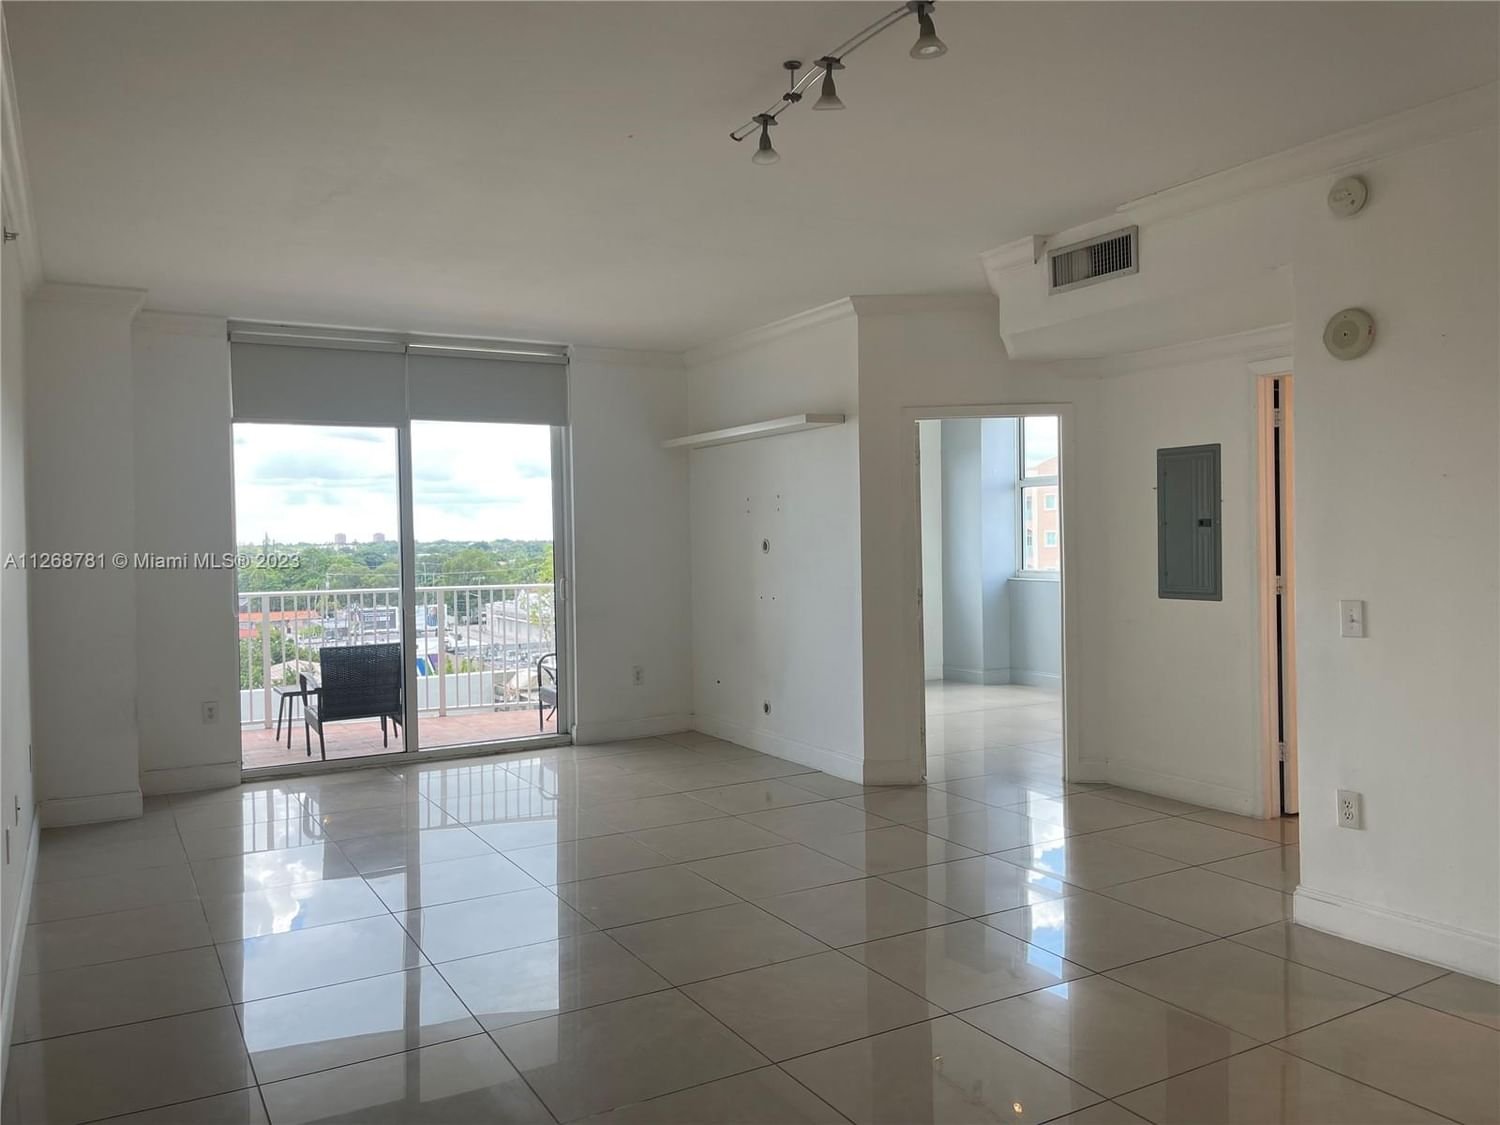 Real estate property located at 3180 Coral Way #606, Miami-Dade County, Miami, FL